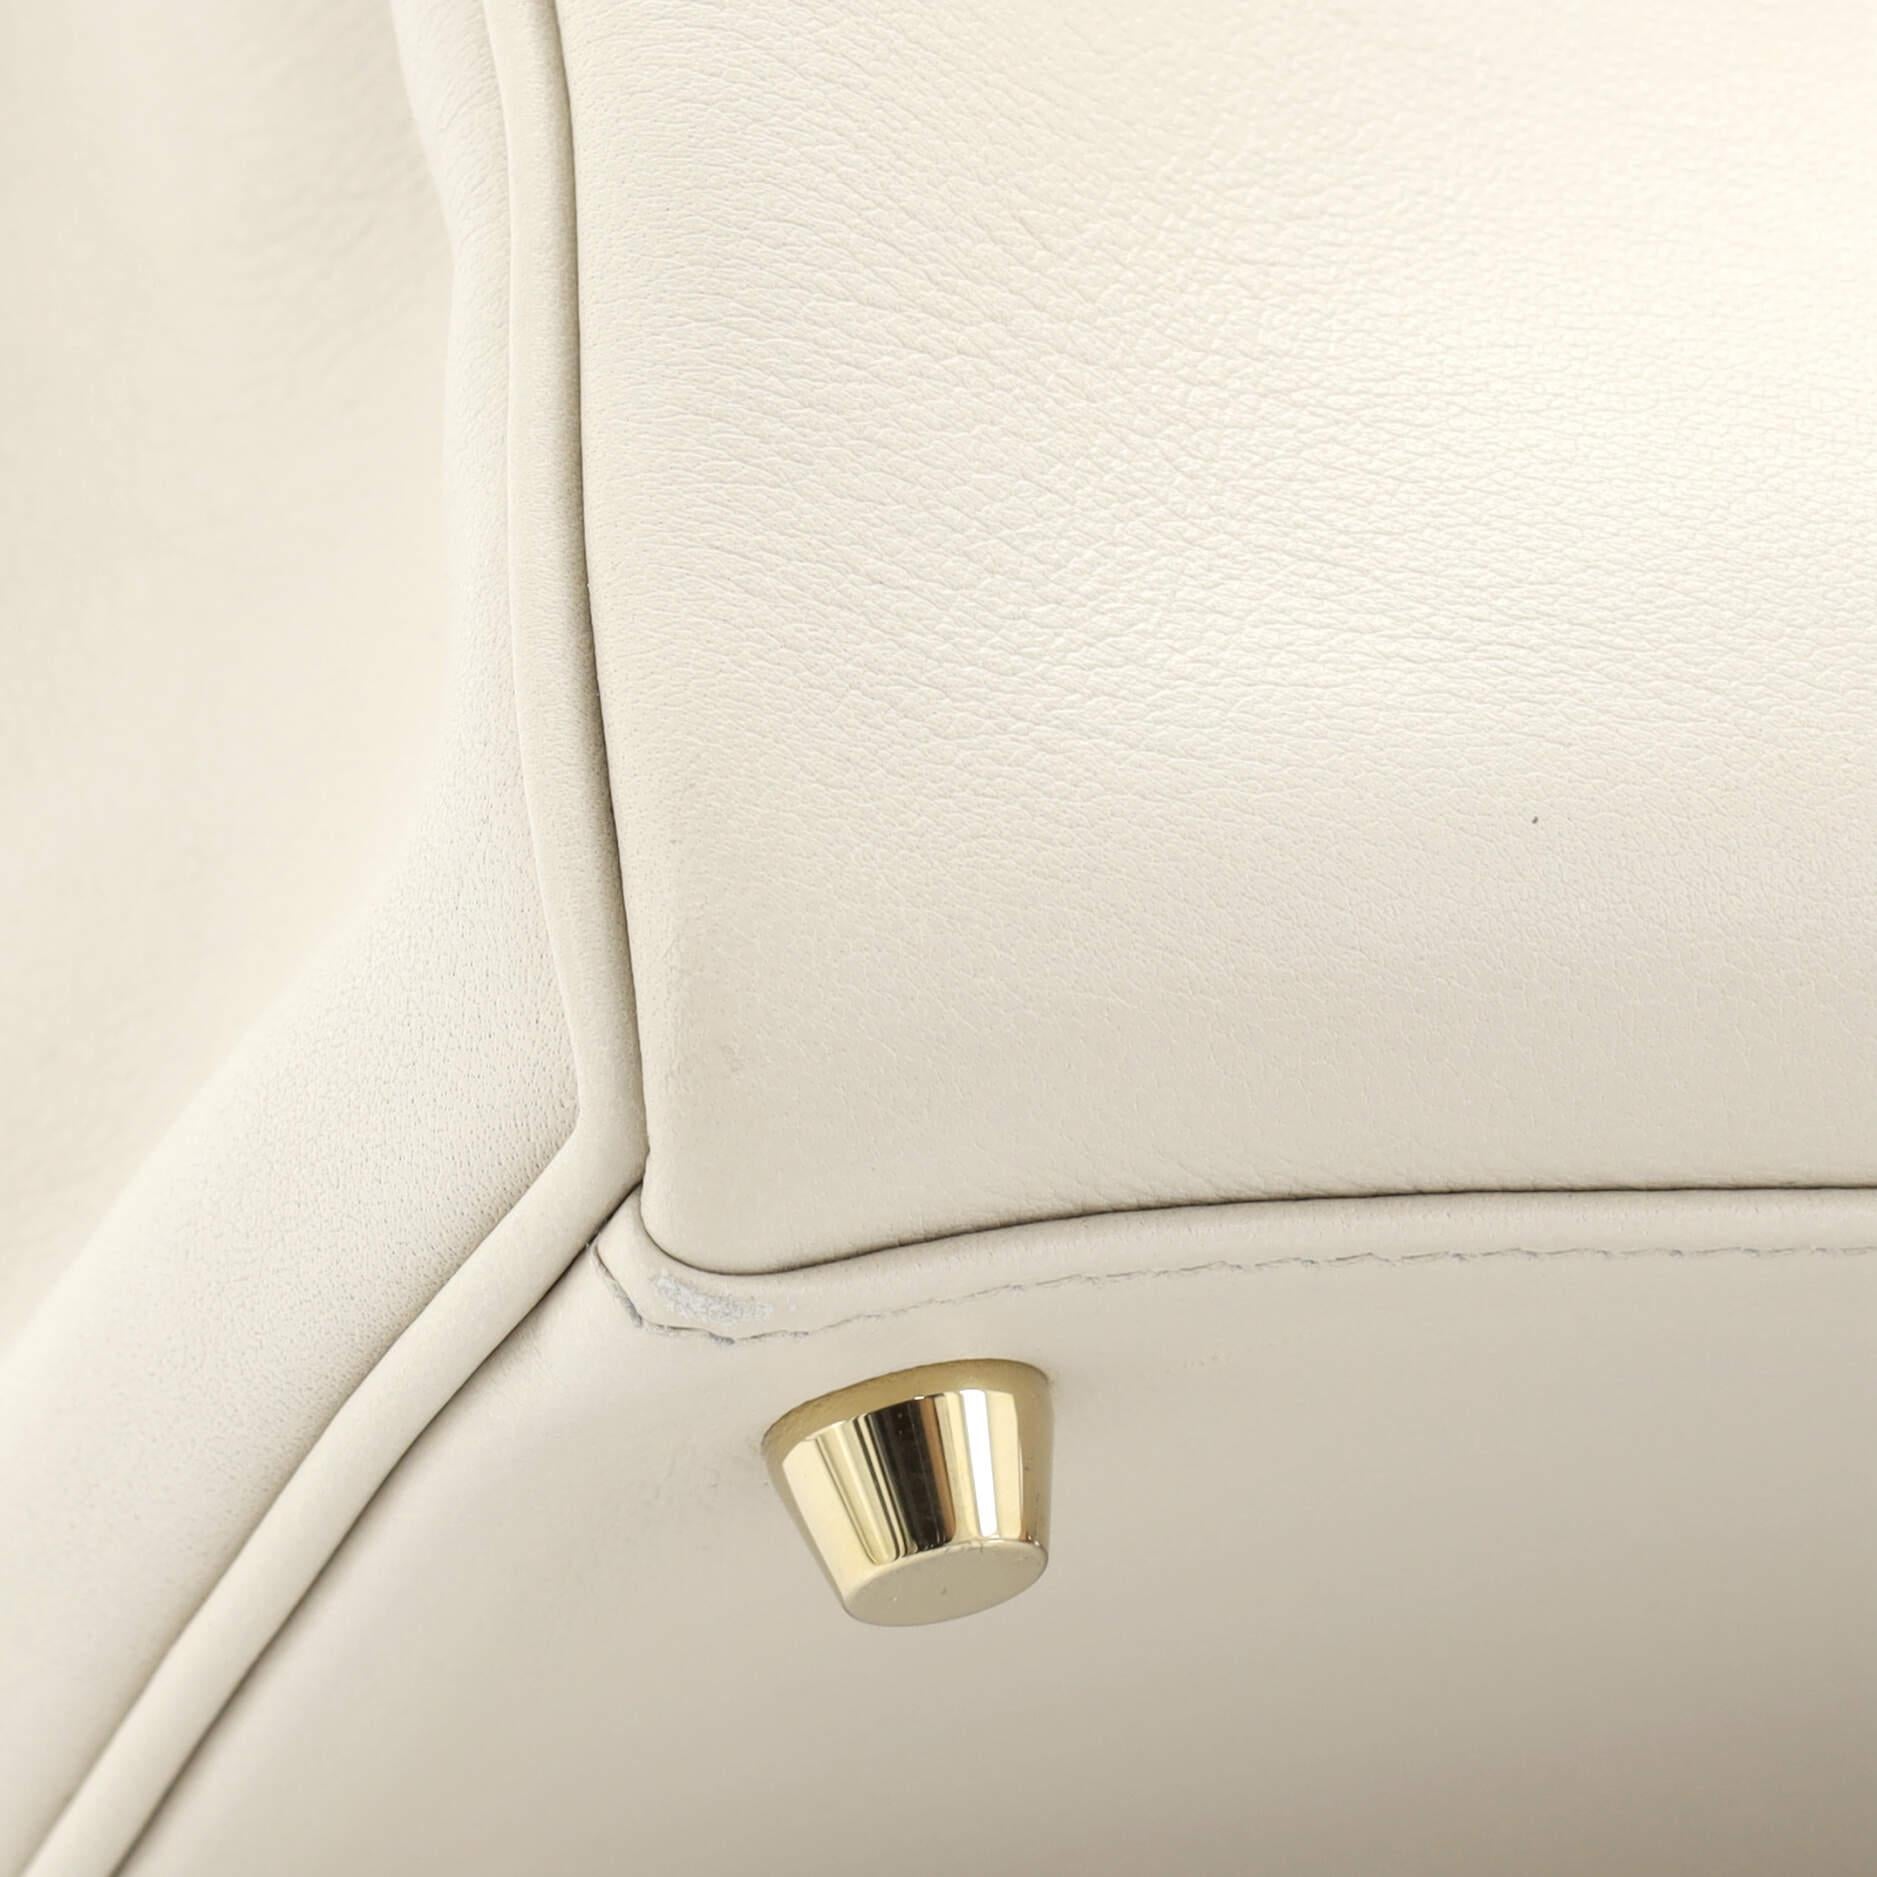 Hermes Kelly Handbag Light Swift with Gold Hardware 25 6